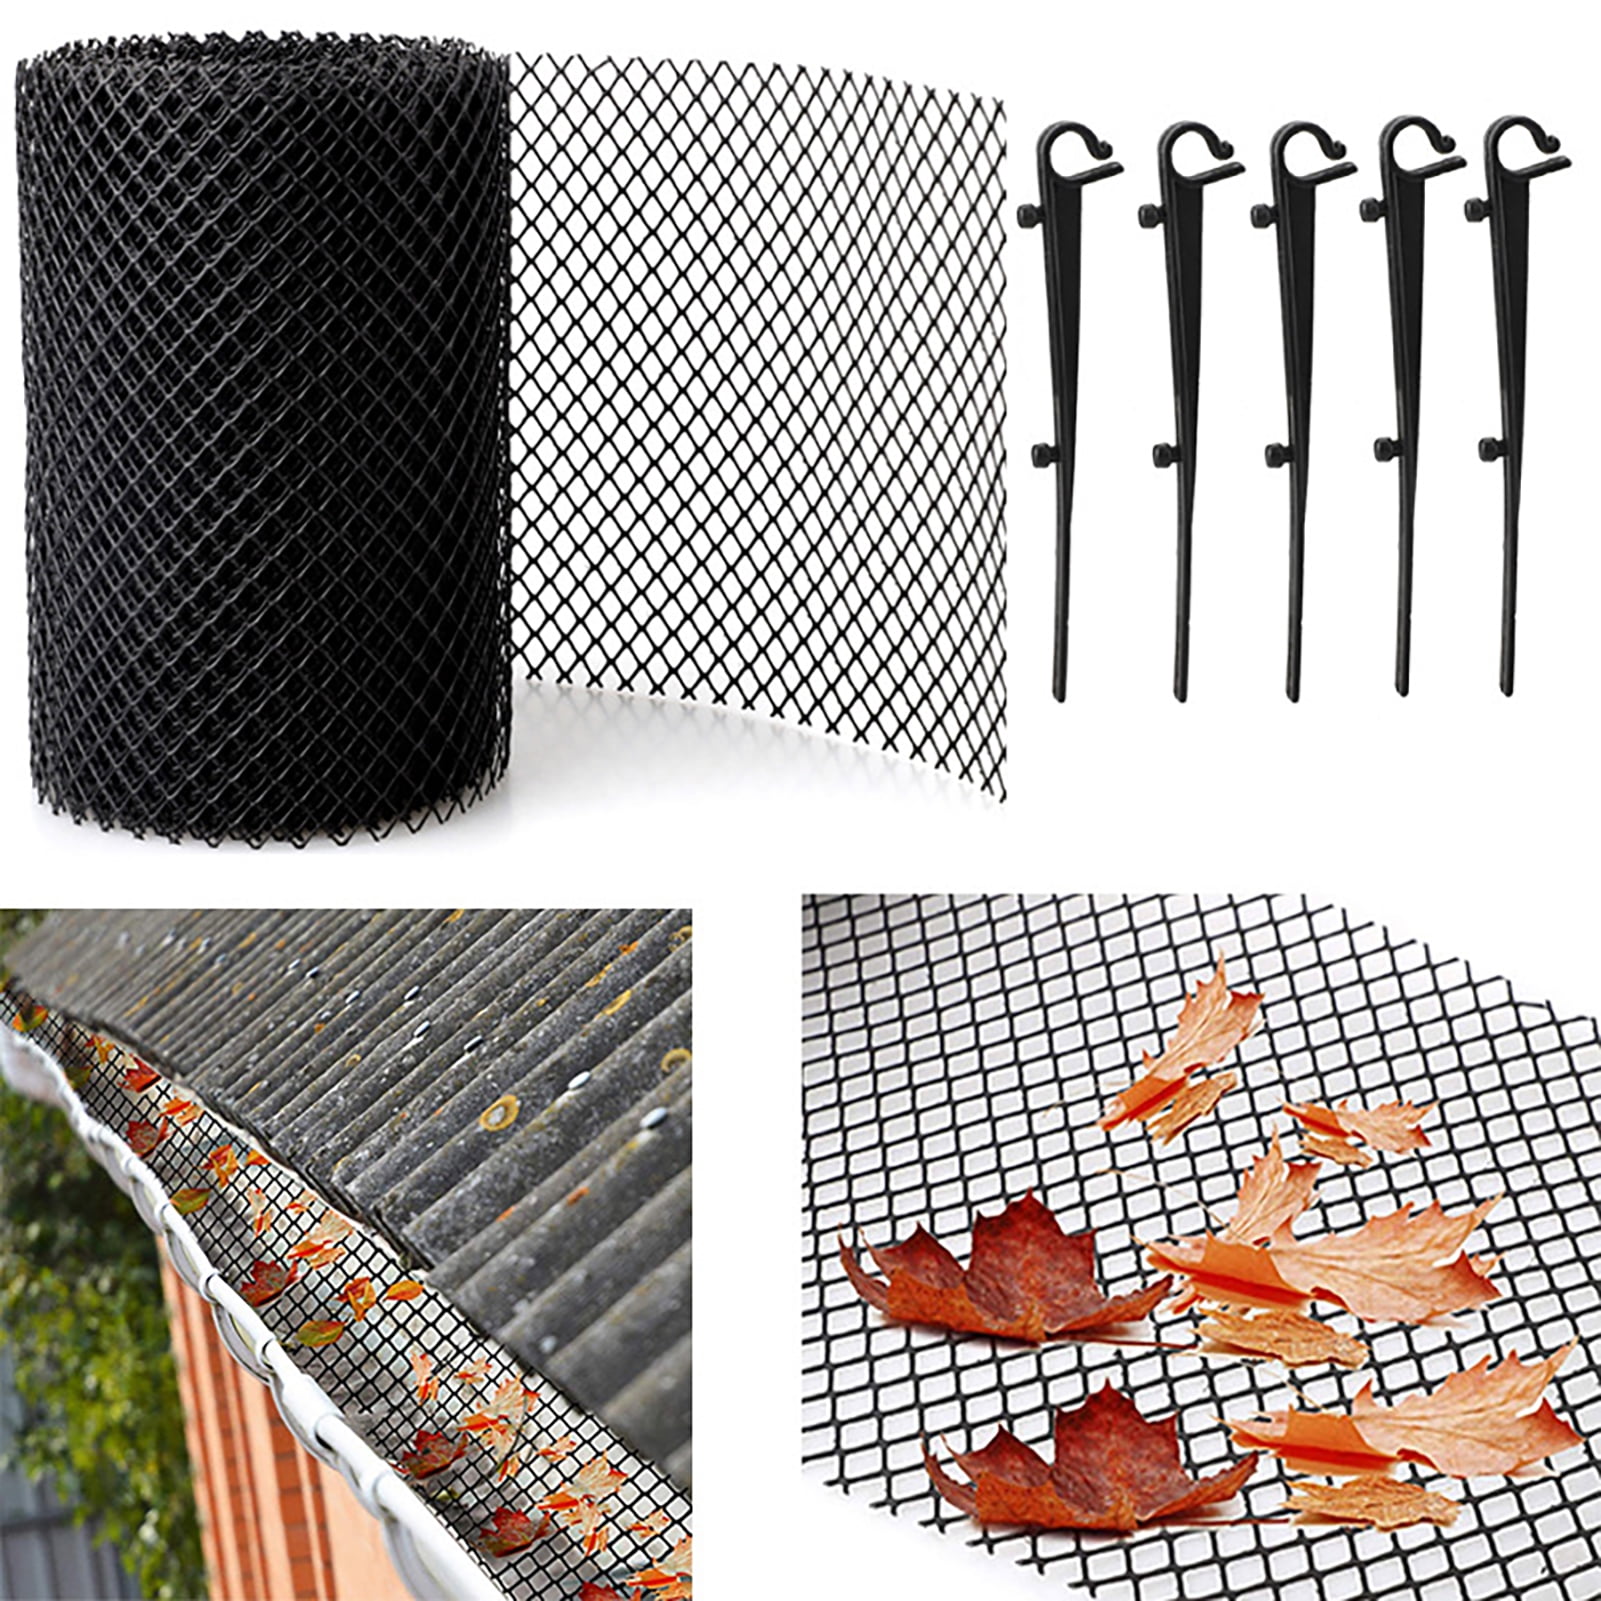 Guttering mesh 8 clips gutter prevent leaves blocking debris 6m x 16cm roll grid 